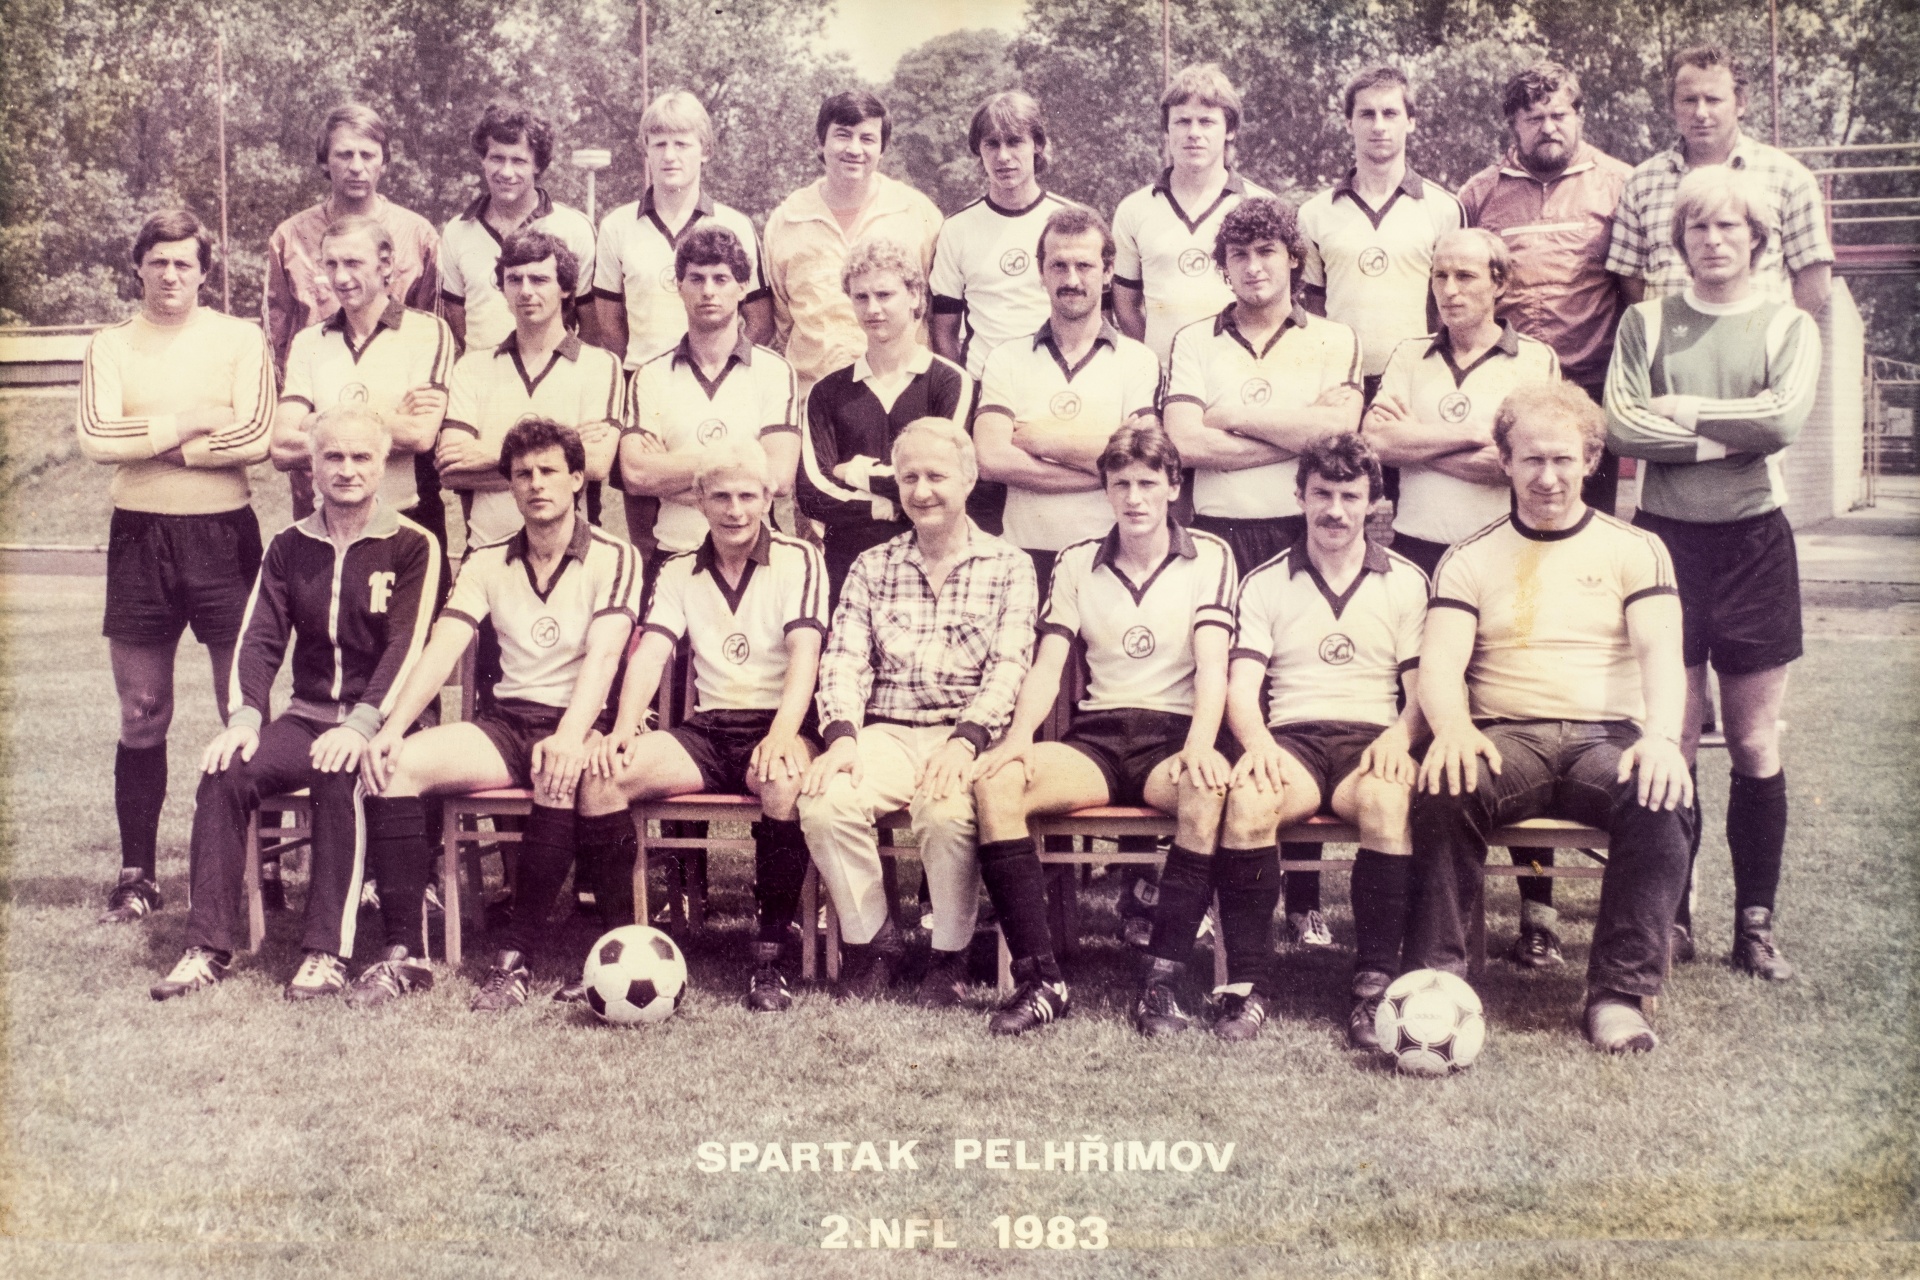 Společná fotografie týmu Spartak Pelhřimov z roku 1983, kdy tým hrál 2. Národní Fotbalovou Ligu.